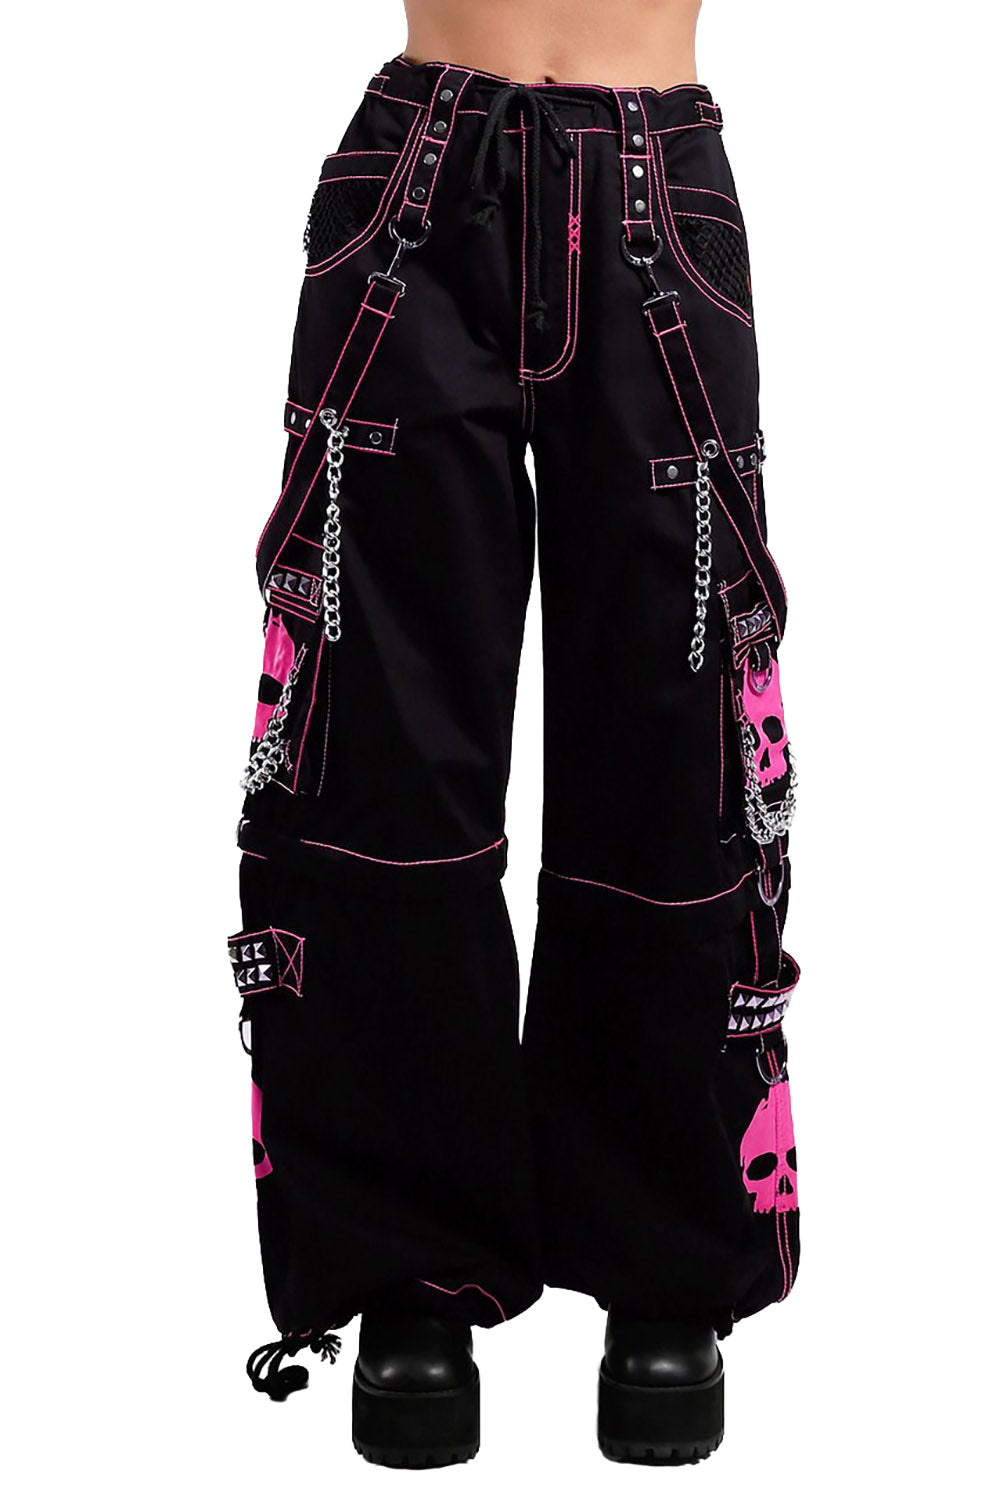 Royal Bones By Tripp Black & Pink Lace-Up Pants